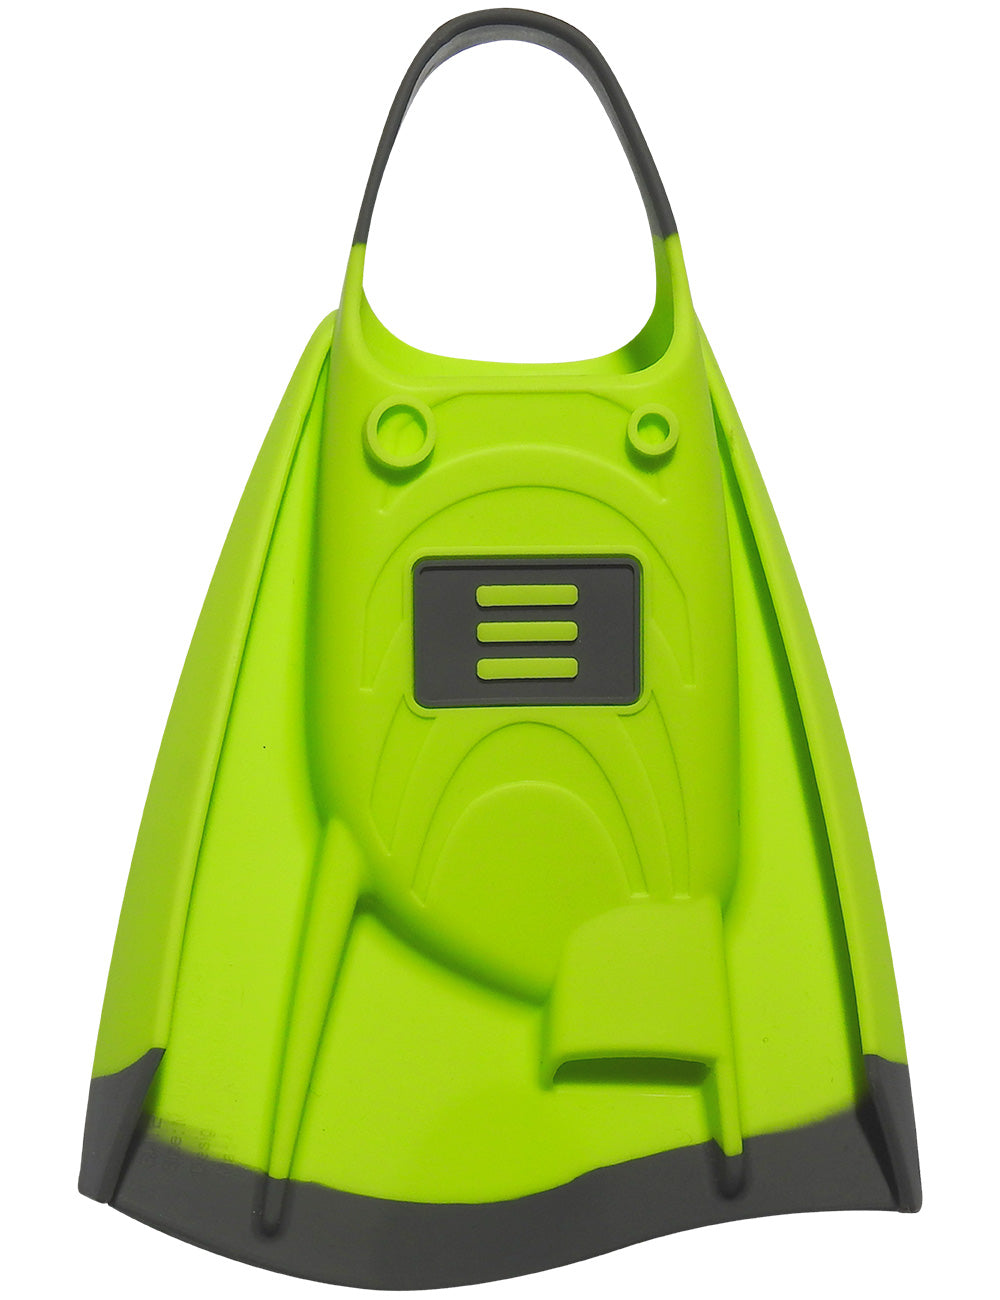 Elite Max Swim Fins - Flouro/Charcoal